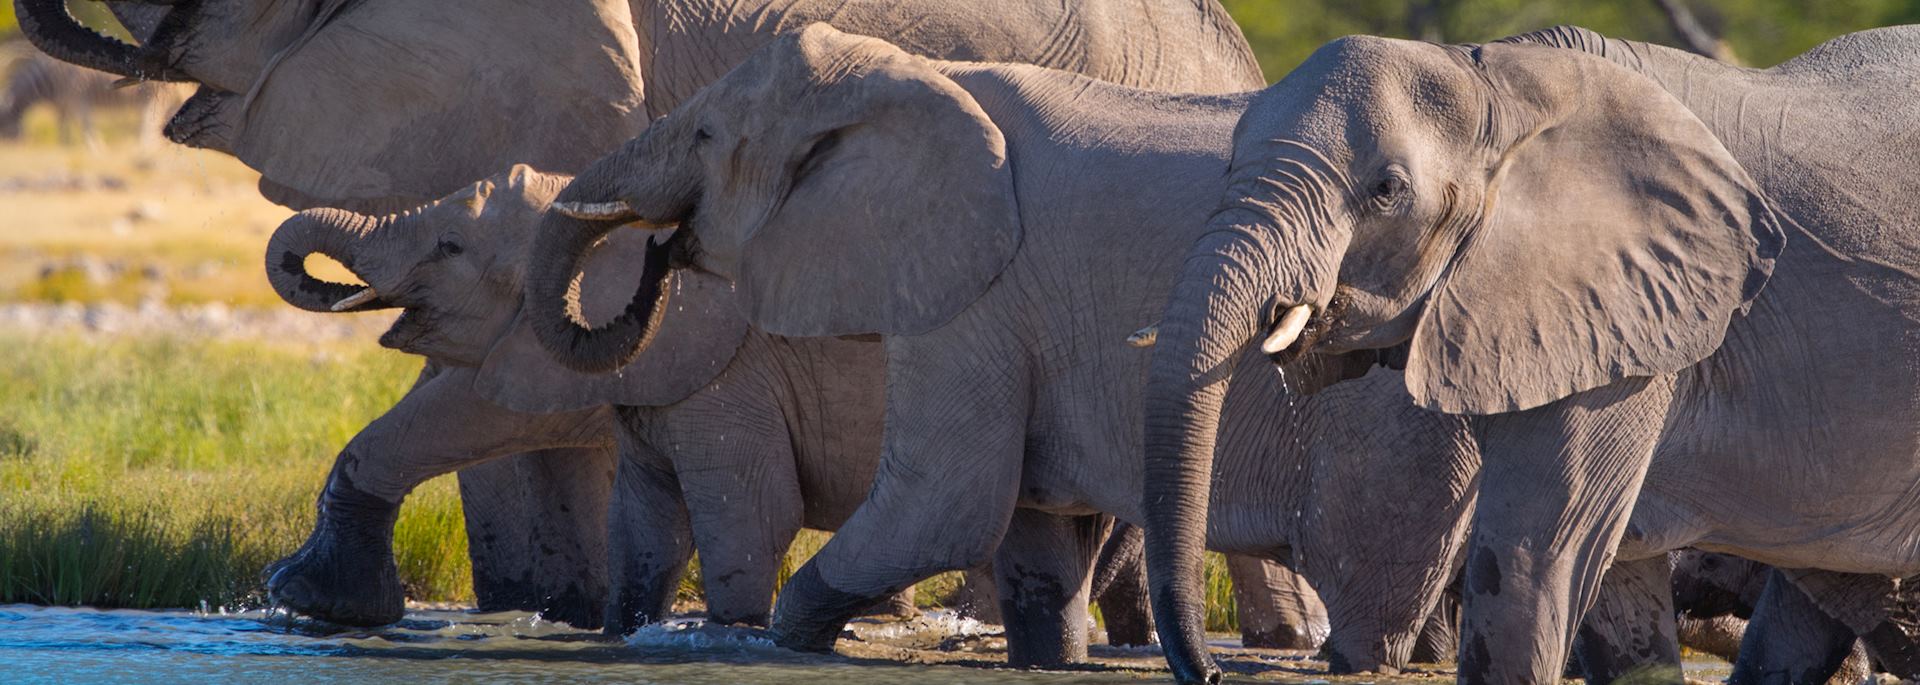 Elephants in Nkasa Lupala National Park